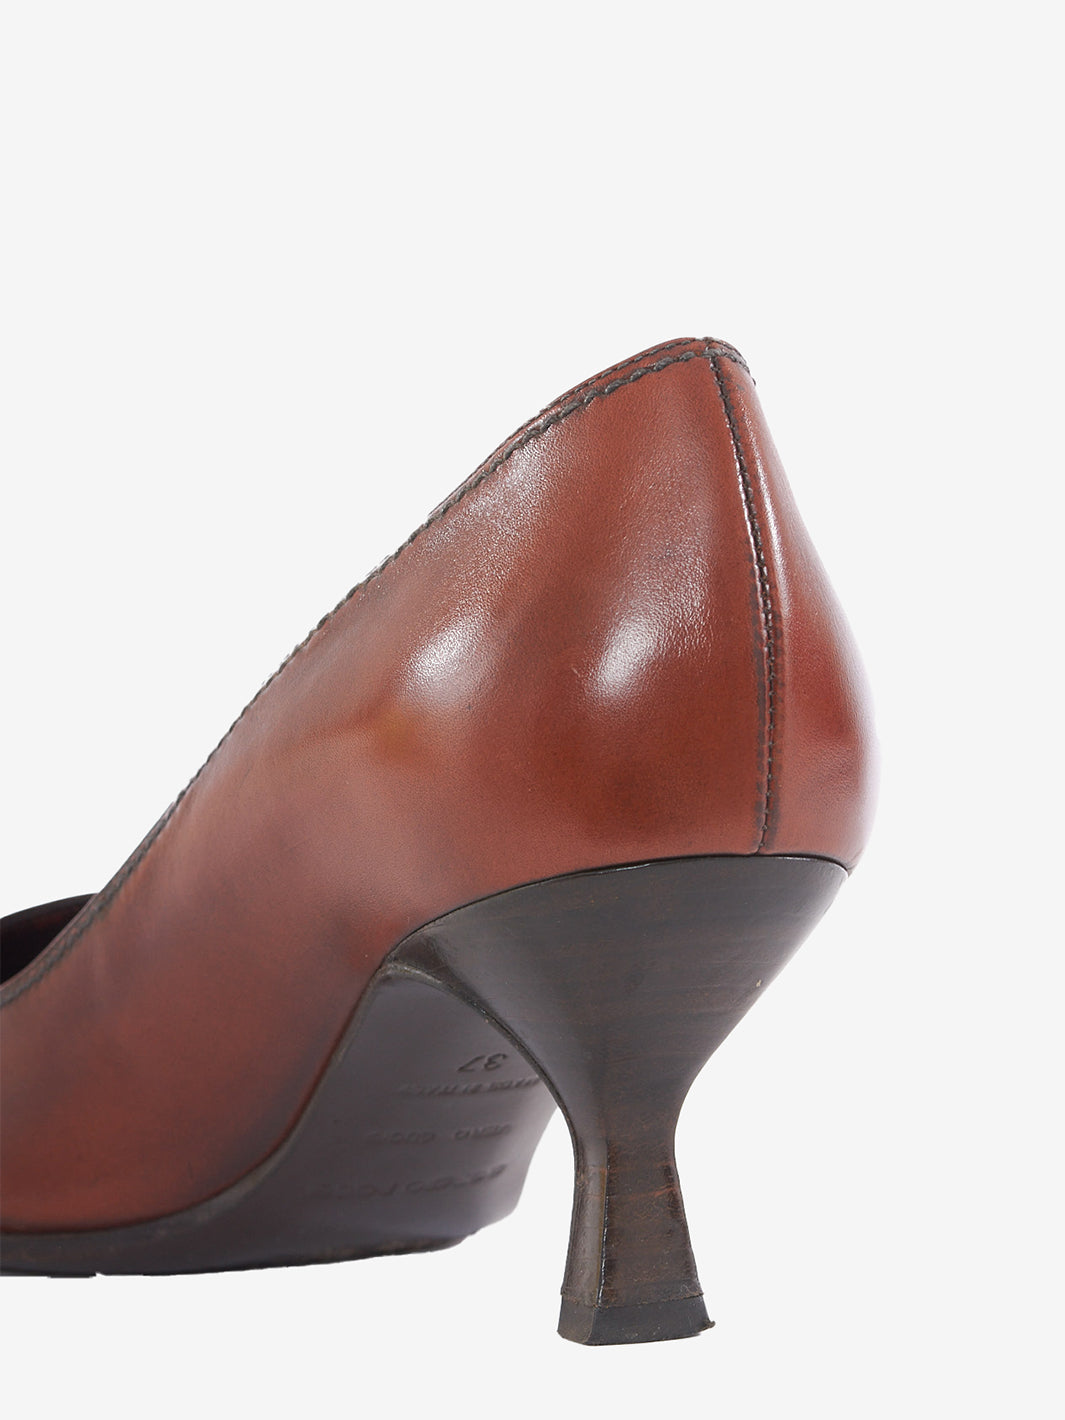 Sergio Rossi heeled shoe